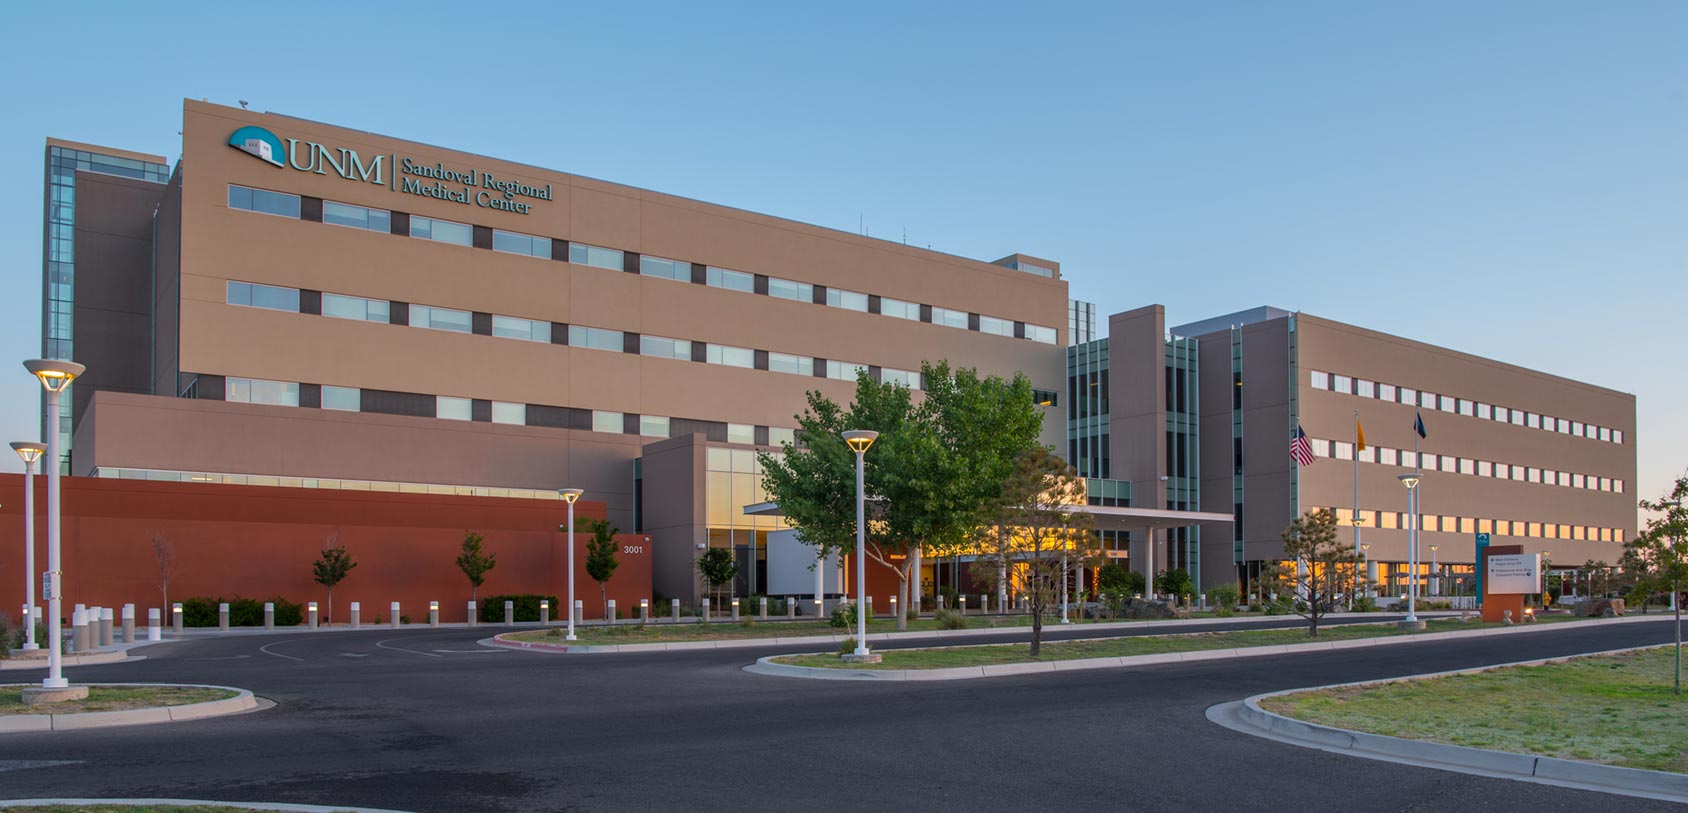 Foto externa do Sandoval Regional Medical Center